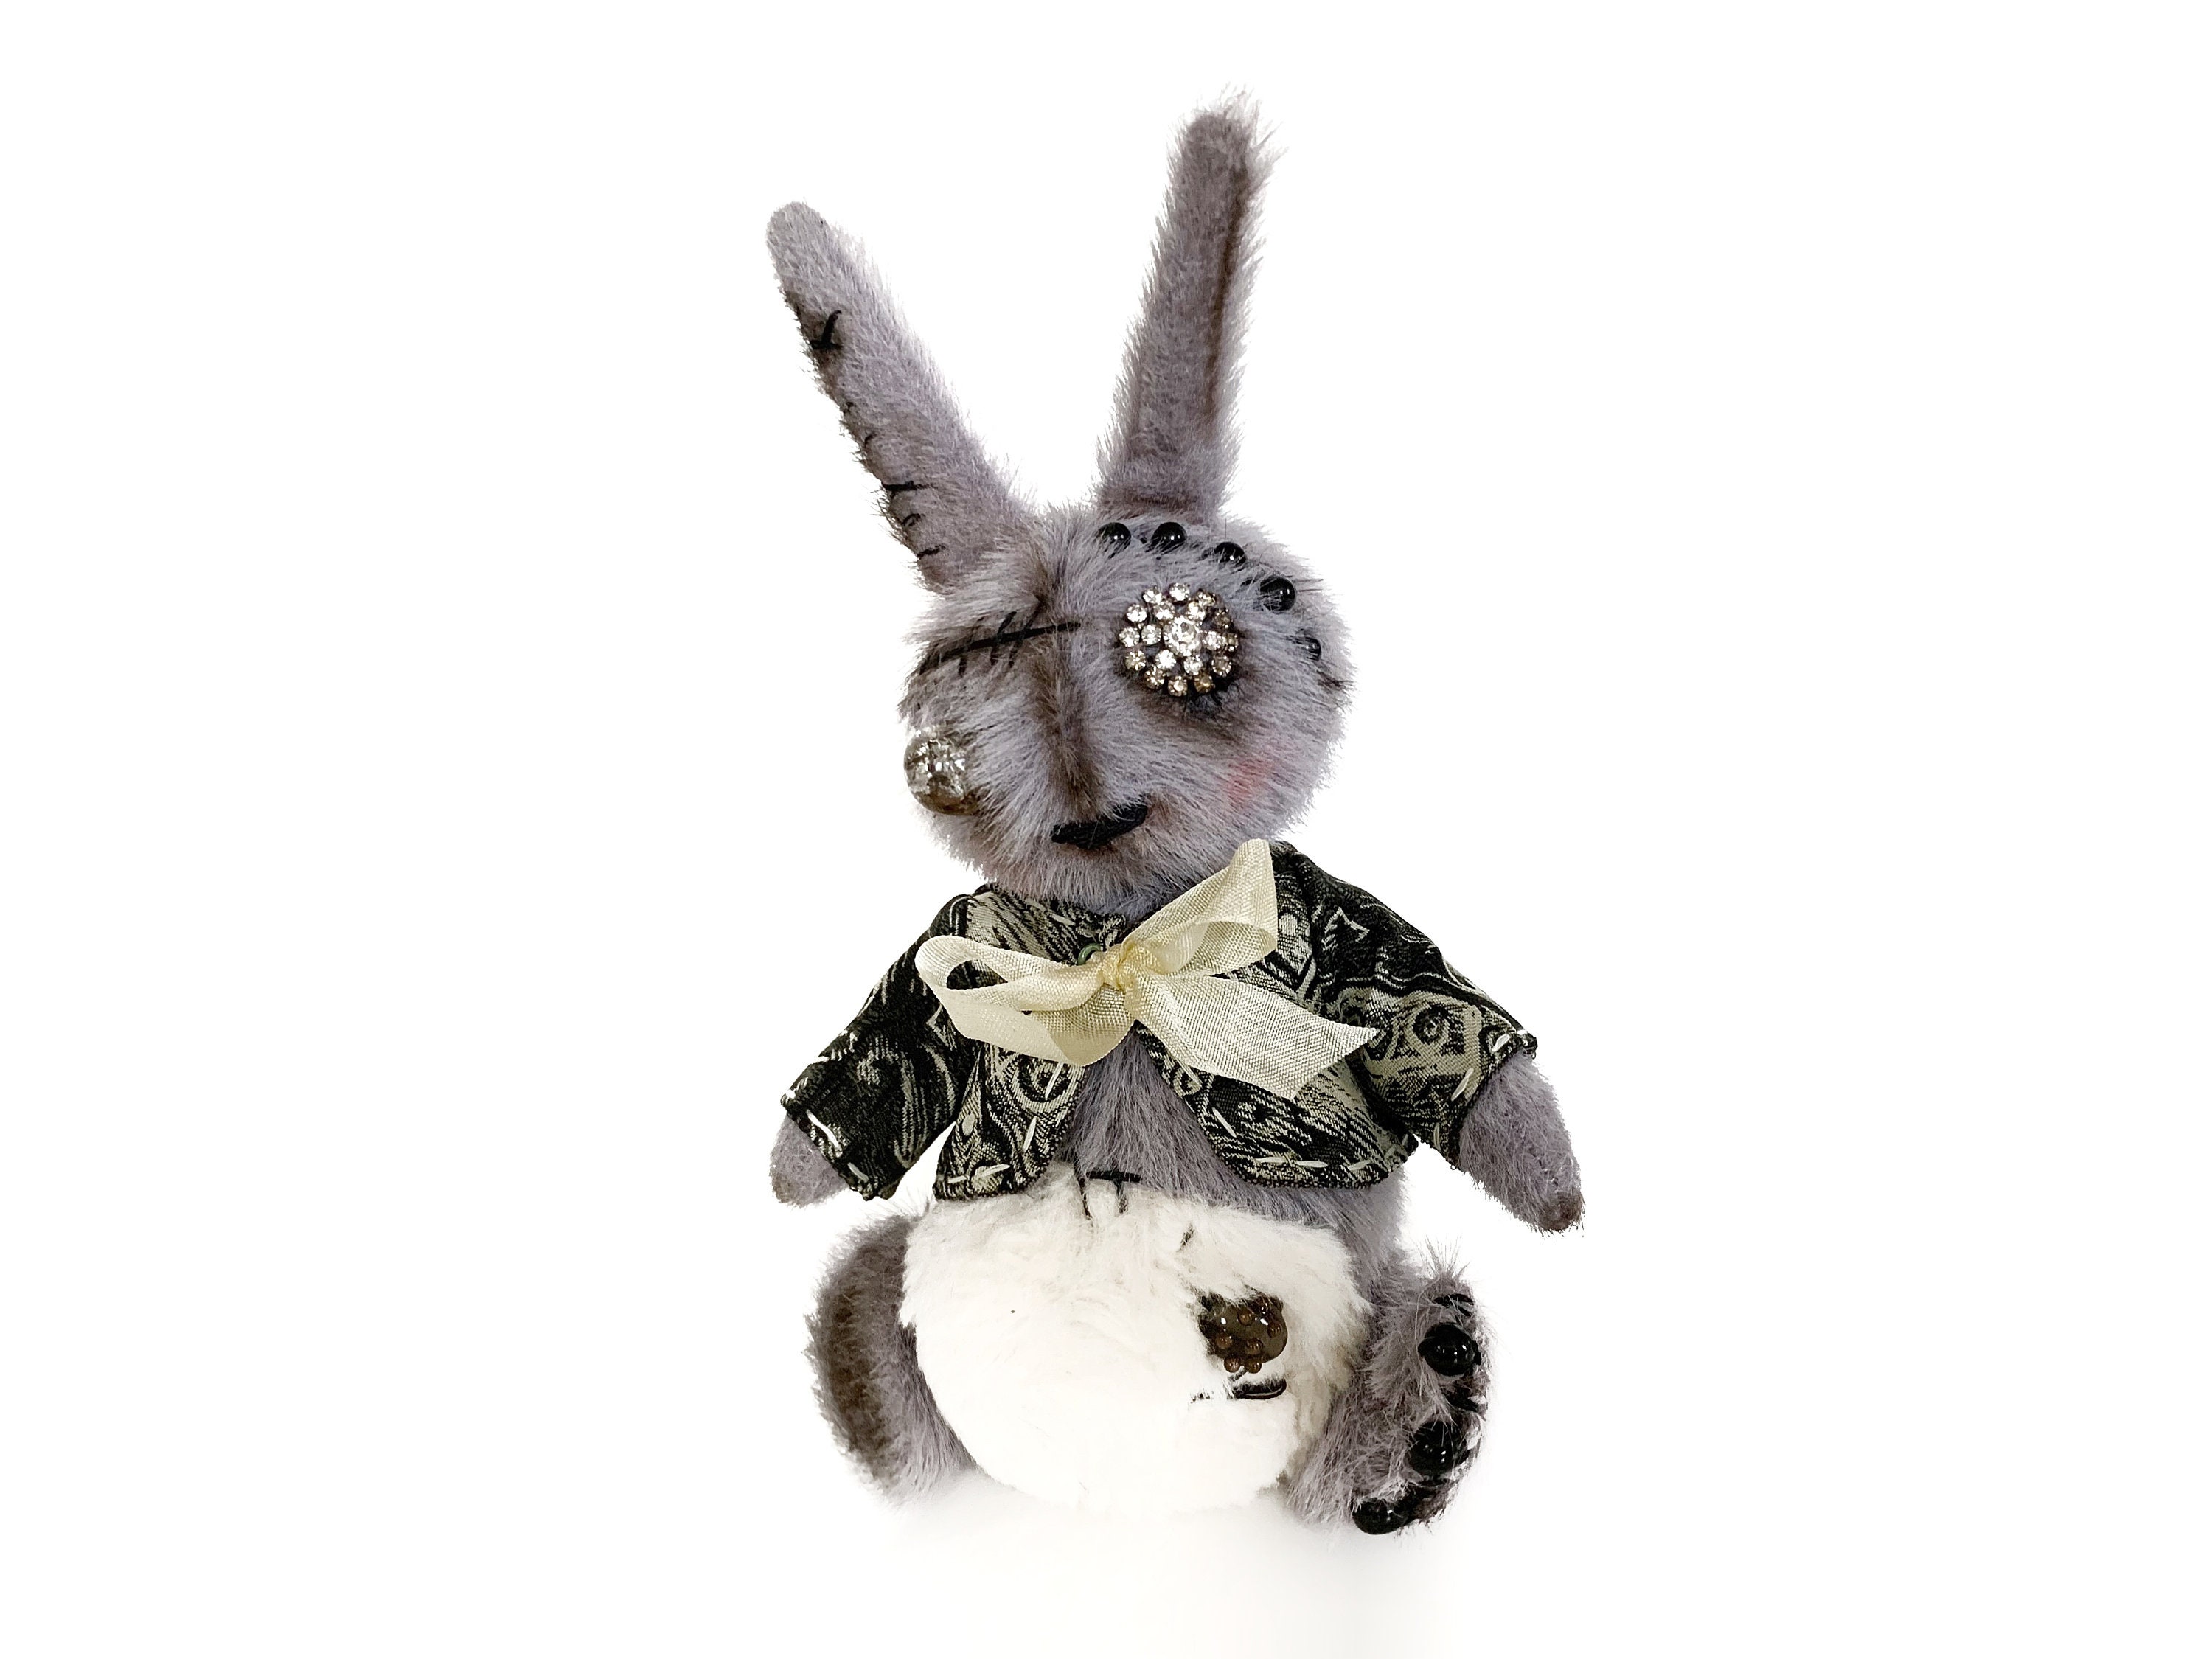 LKMYHY 12in Creepy Goth Bunny Plush Crazy Rabbit Plushie Toys, Spooky Bunny  Stuffed Animal Doll for …See more LKMYHY 12in Creepy Goth Bunny Plush